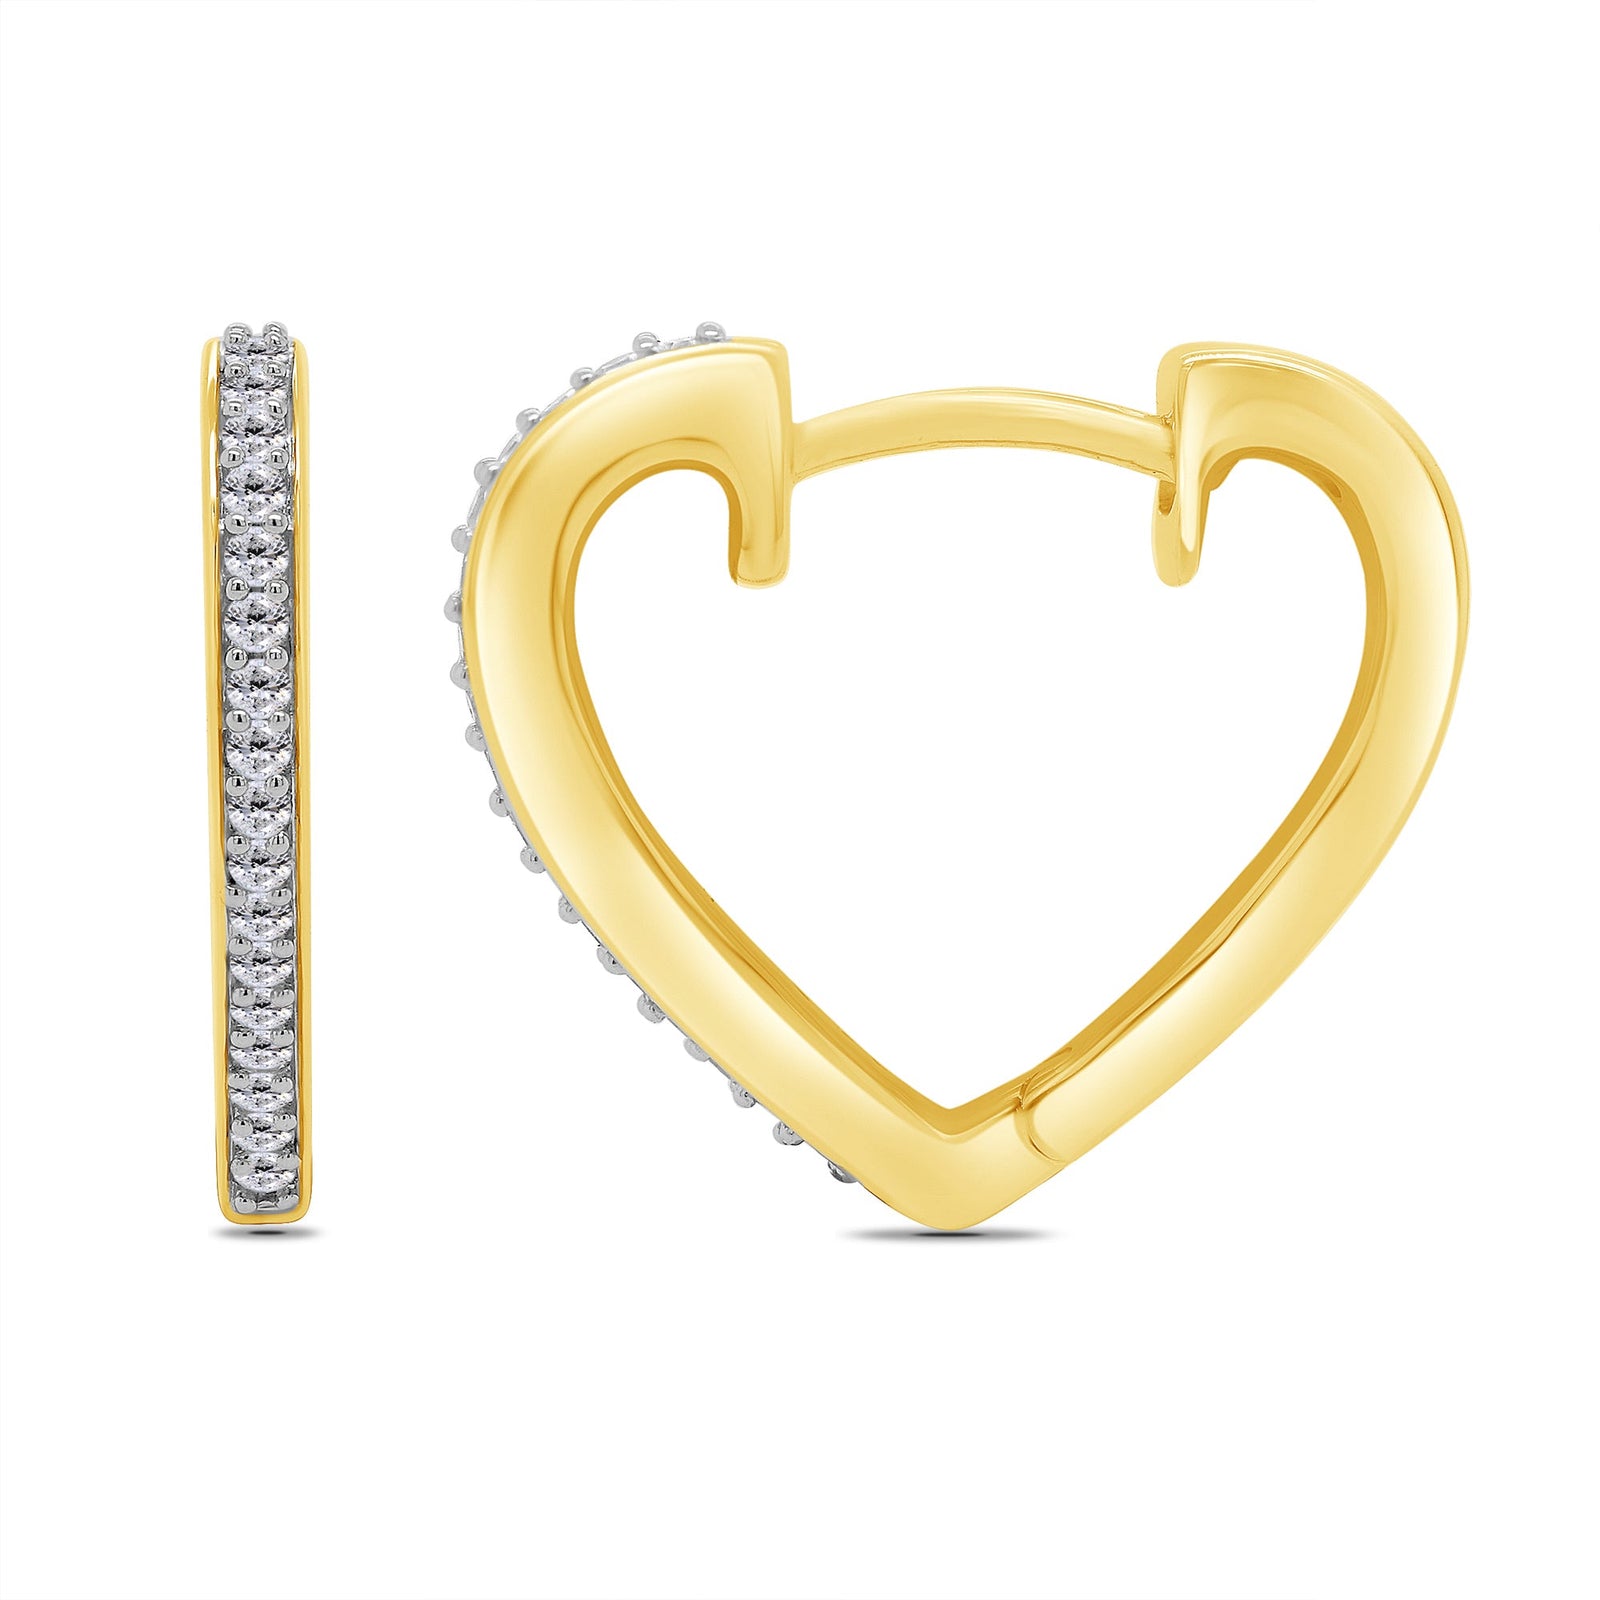 9ct gold channel edge diamond set heart shape huggy earrings 0.14ct